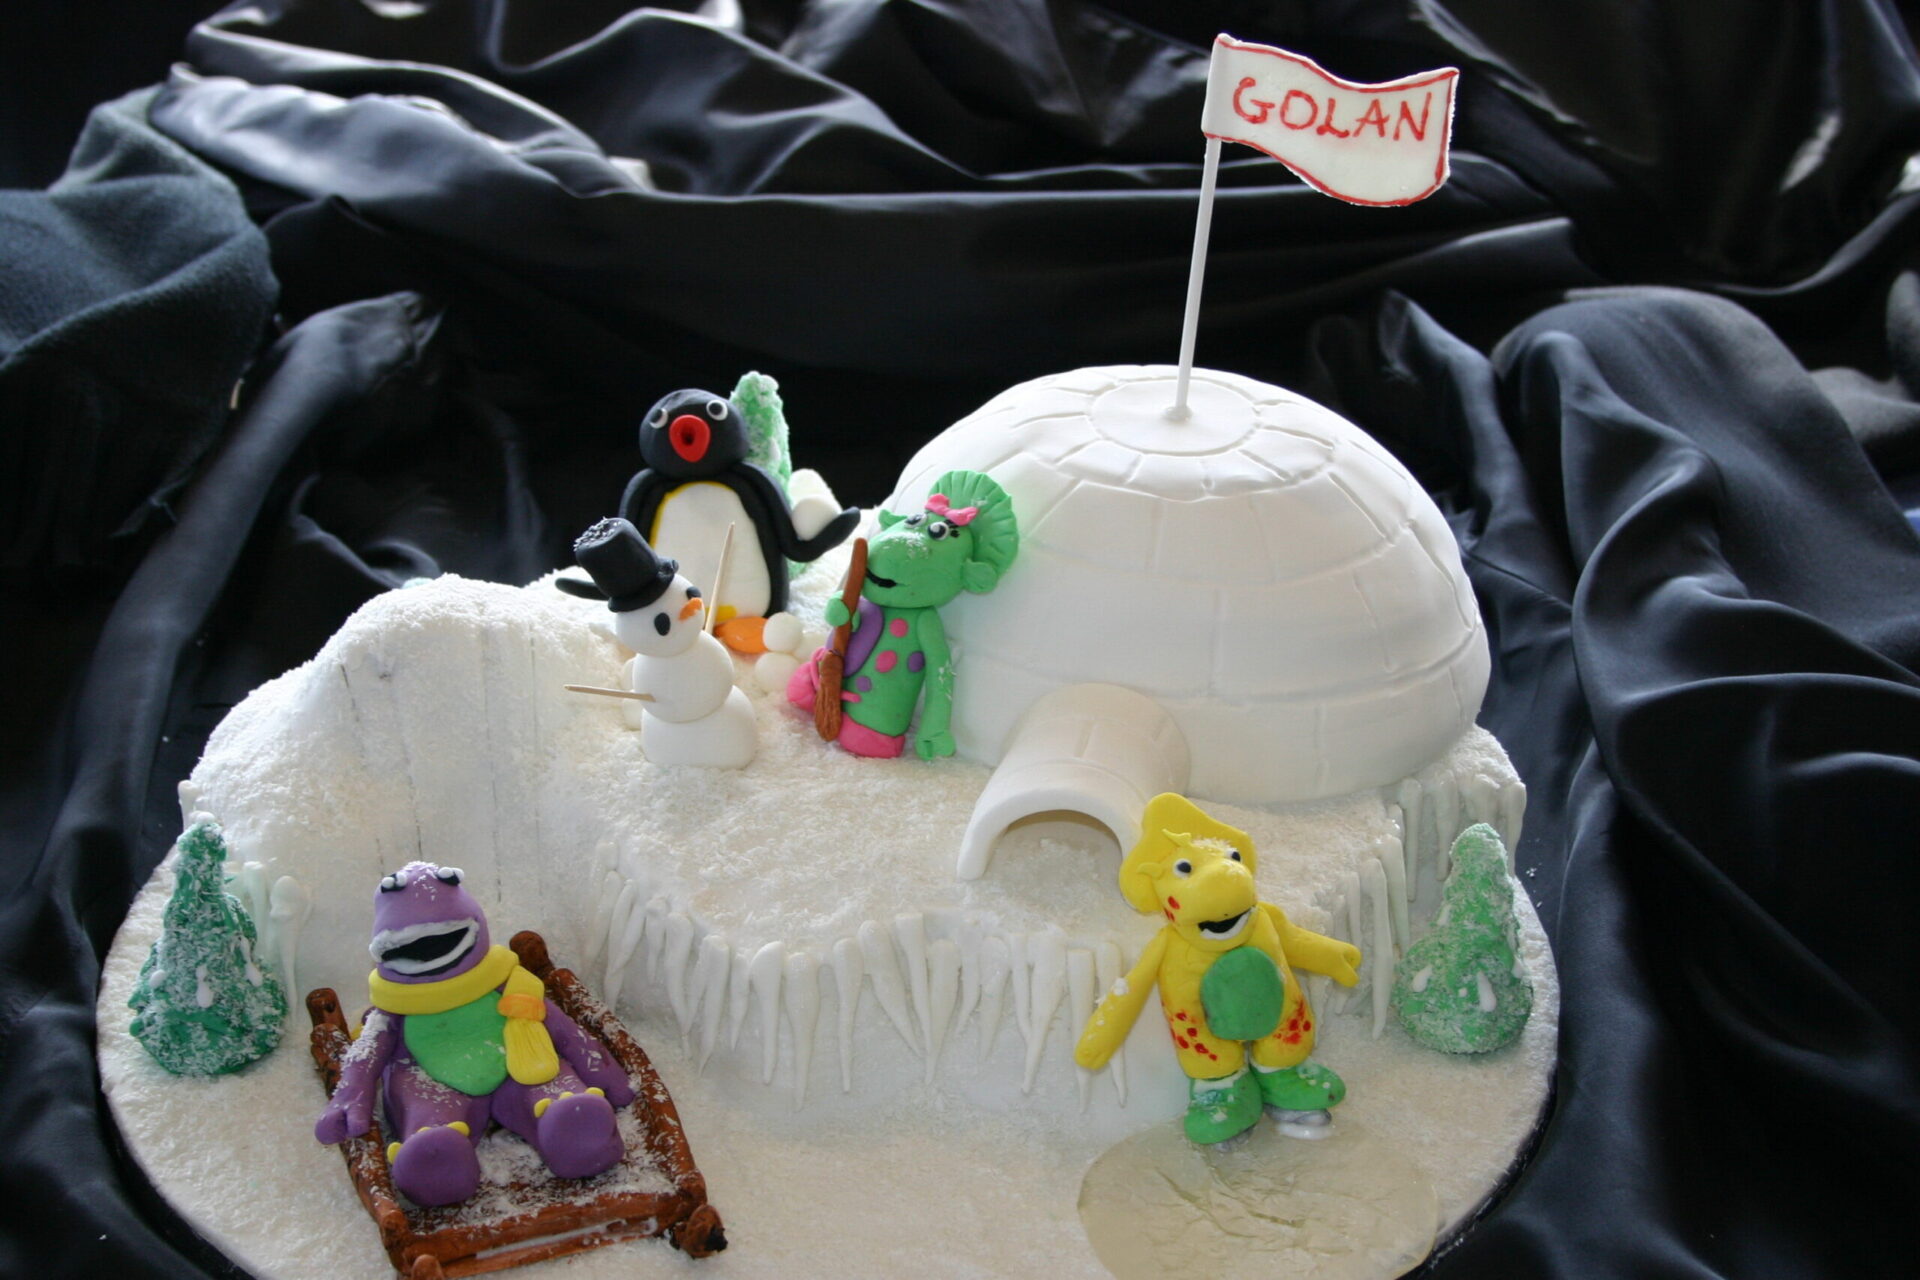 Birthday Barney and Friends Cake | Gift Abu Dhabi Online